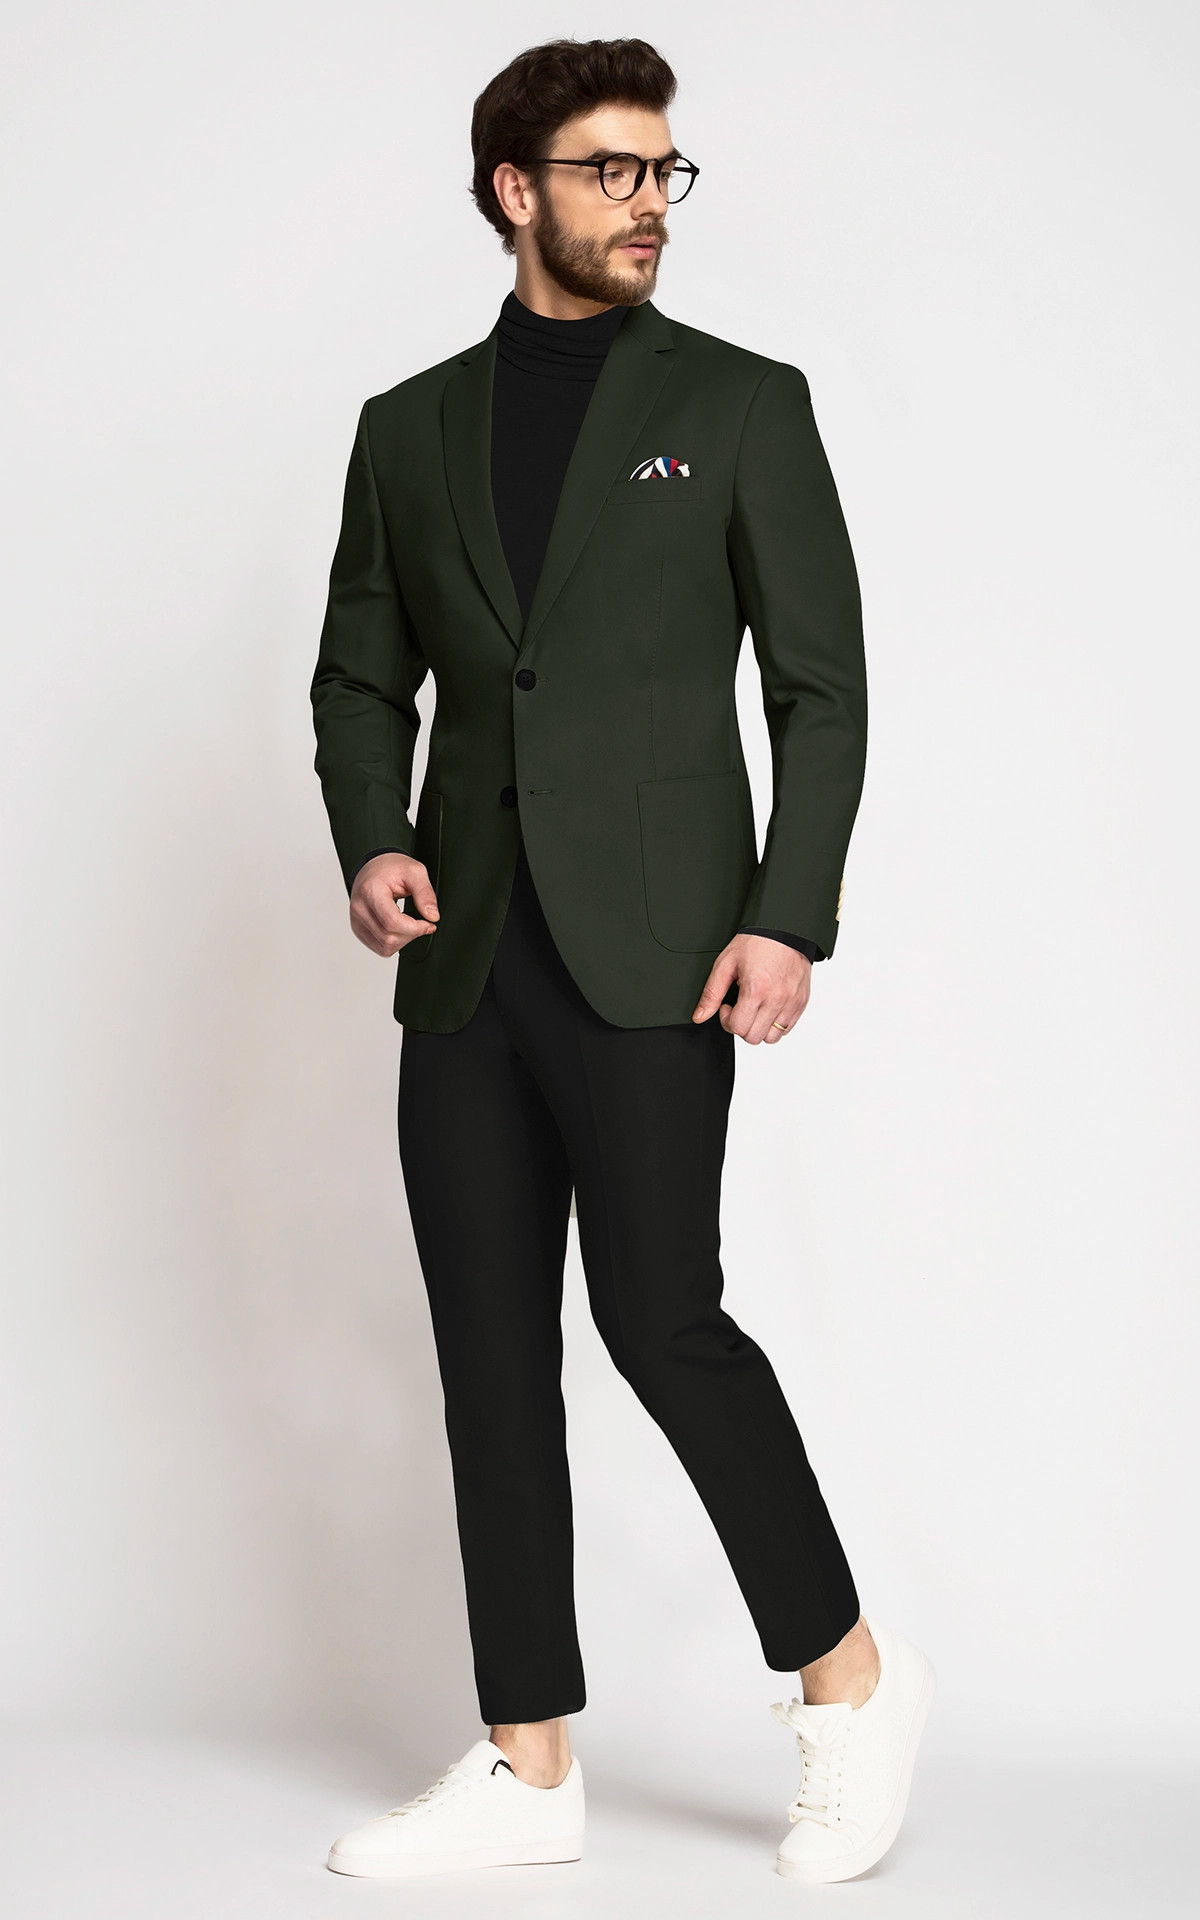 Green Blazer Combinations For Men To Look Stunning